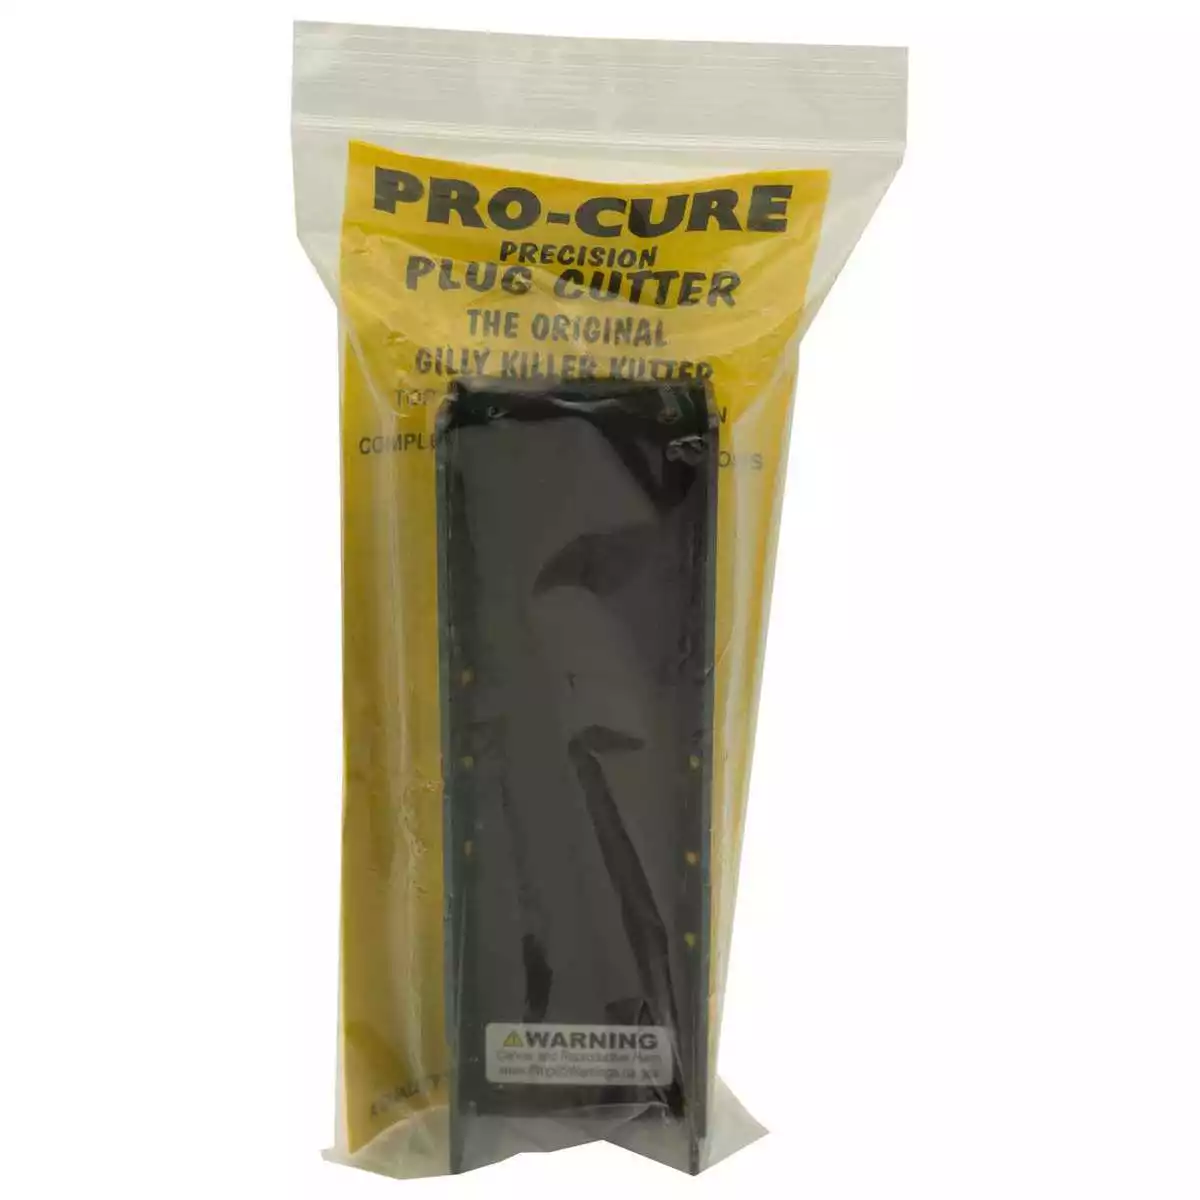 Pro-cure precision plug cutter